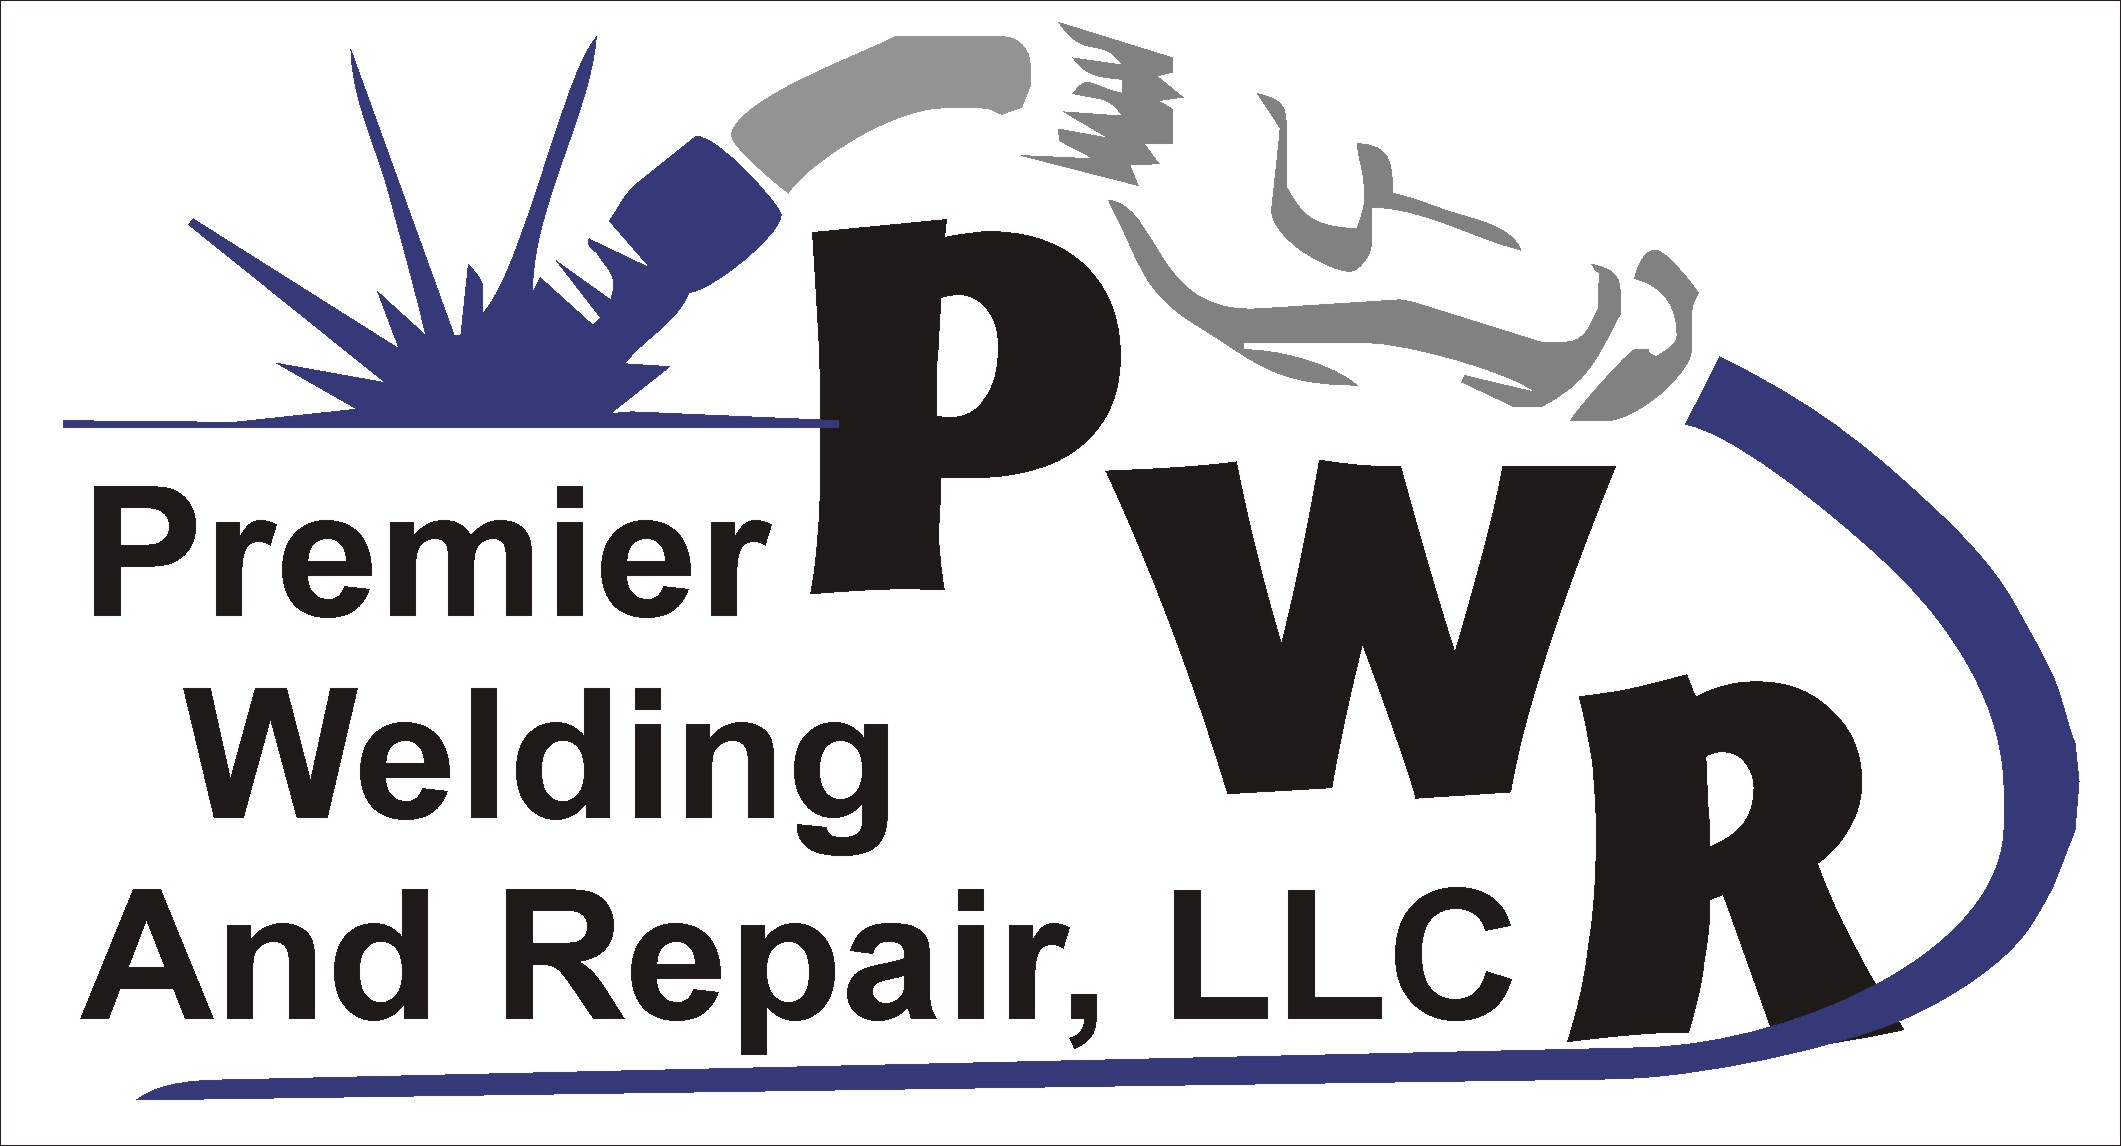 Premier Welding and Repair, LLC